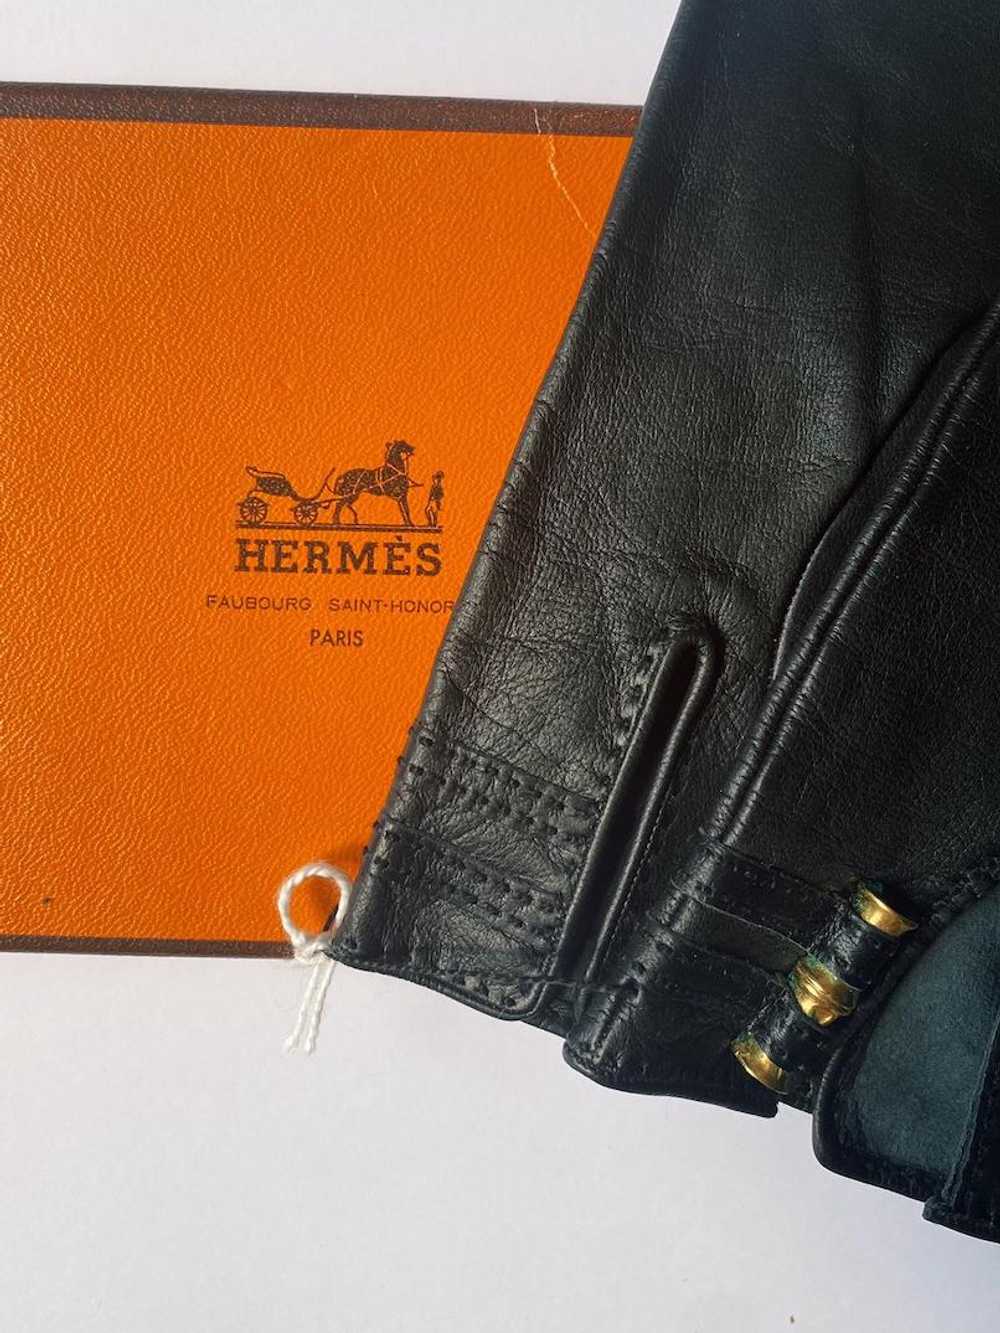 HERMÈS Leather Gloves Black 24 Fbg St Honoré - image 2